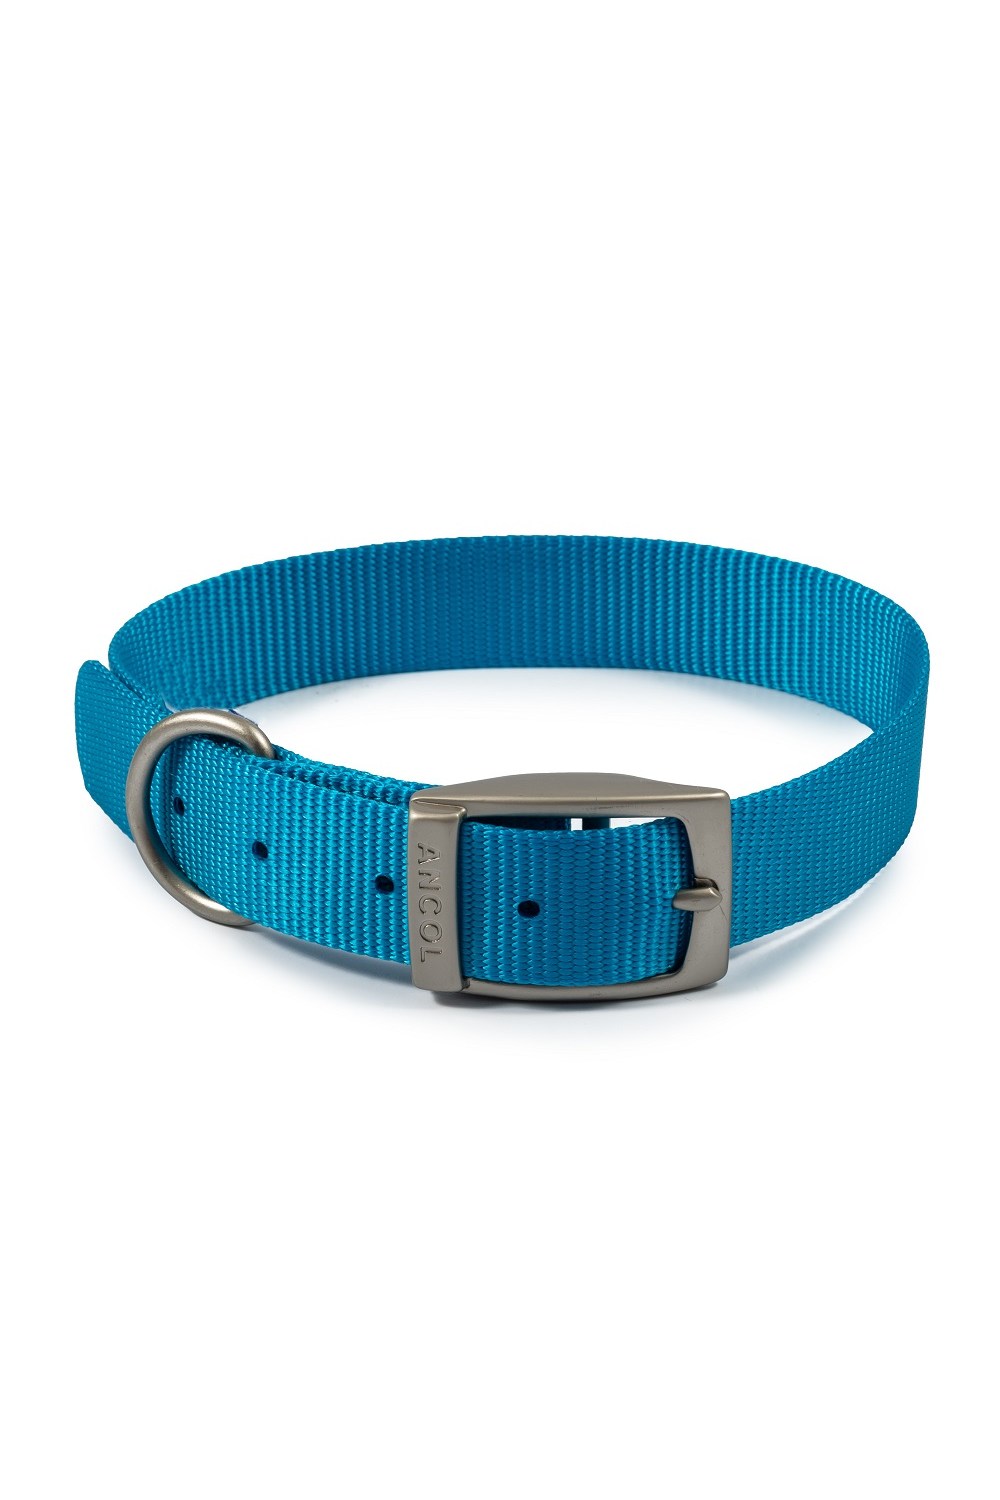 Ancol Nylon Dog Collar (Aqua Blue) (13.78in - 16.93in)